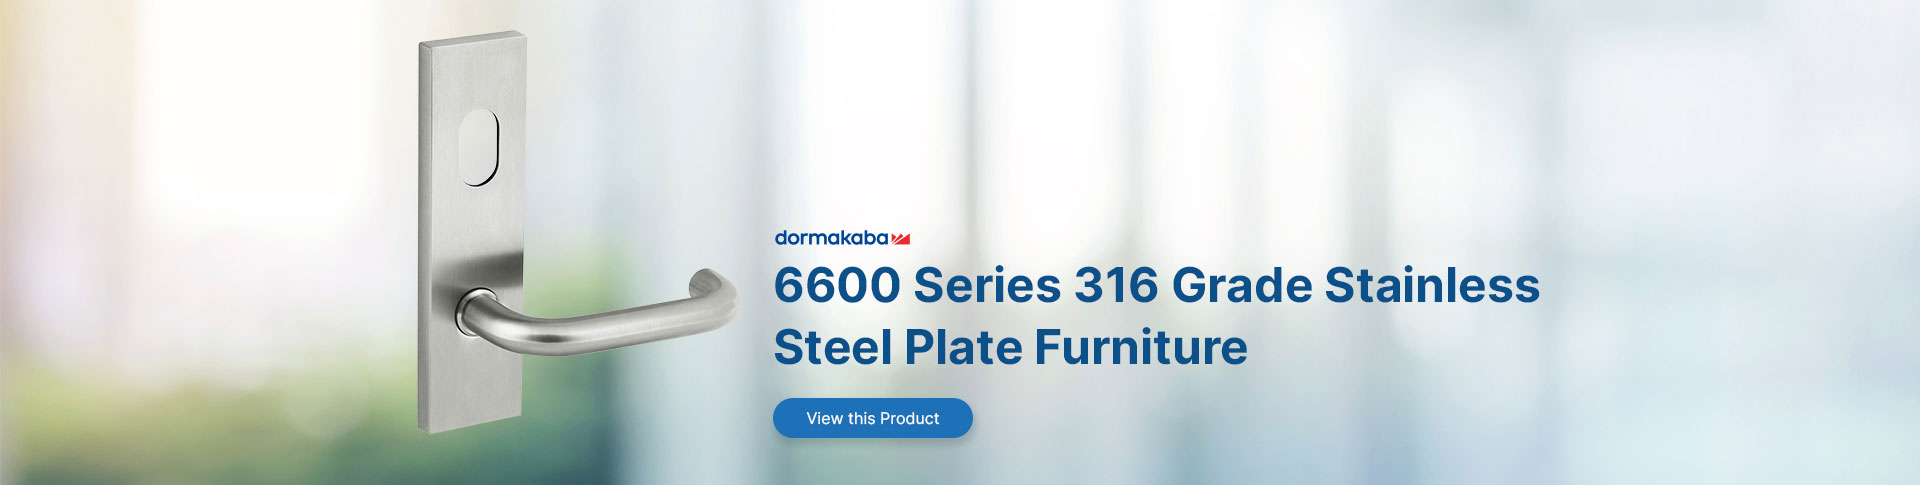 View Dormakaba Steel Plate Furniture